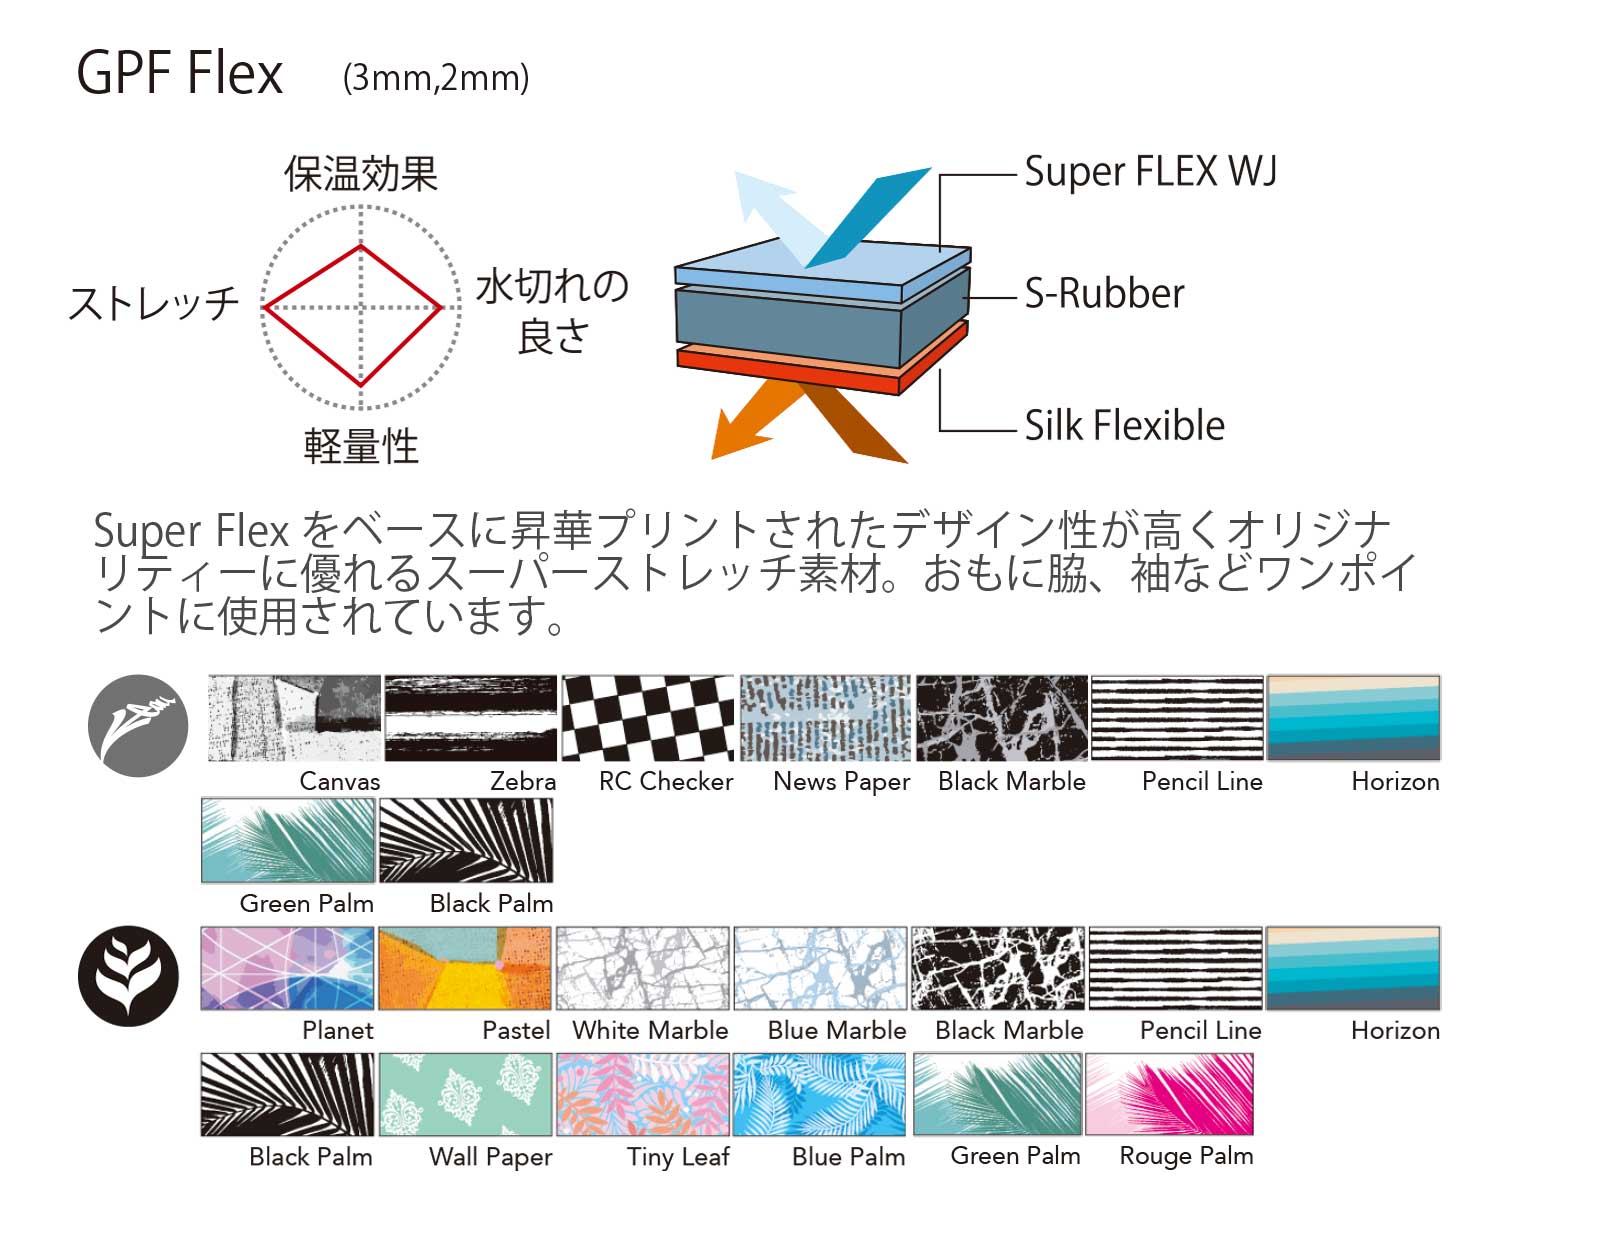 GPF Flex (3mm,2mm) Super Flex をベースに昇華プリントされたデザイン性が高くオリジナ リティーに優れるスーパーストレッチ素材。おもに脇、袖などワンポイ ントに使用されています。